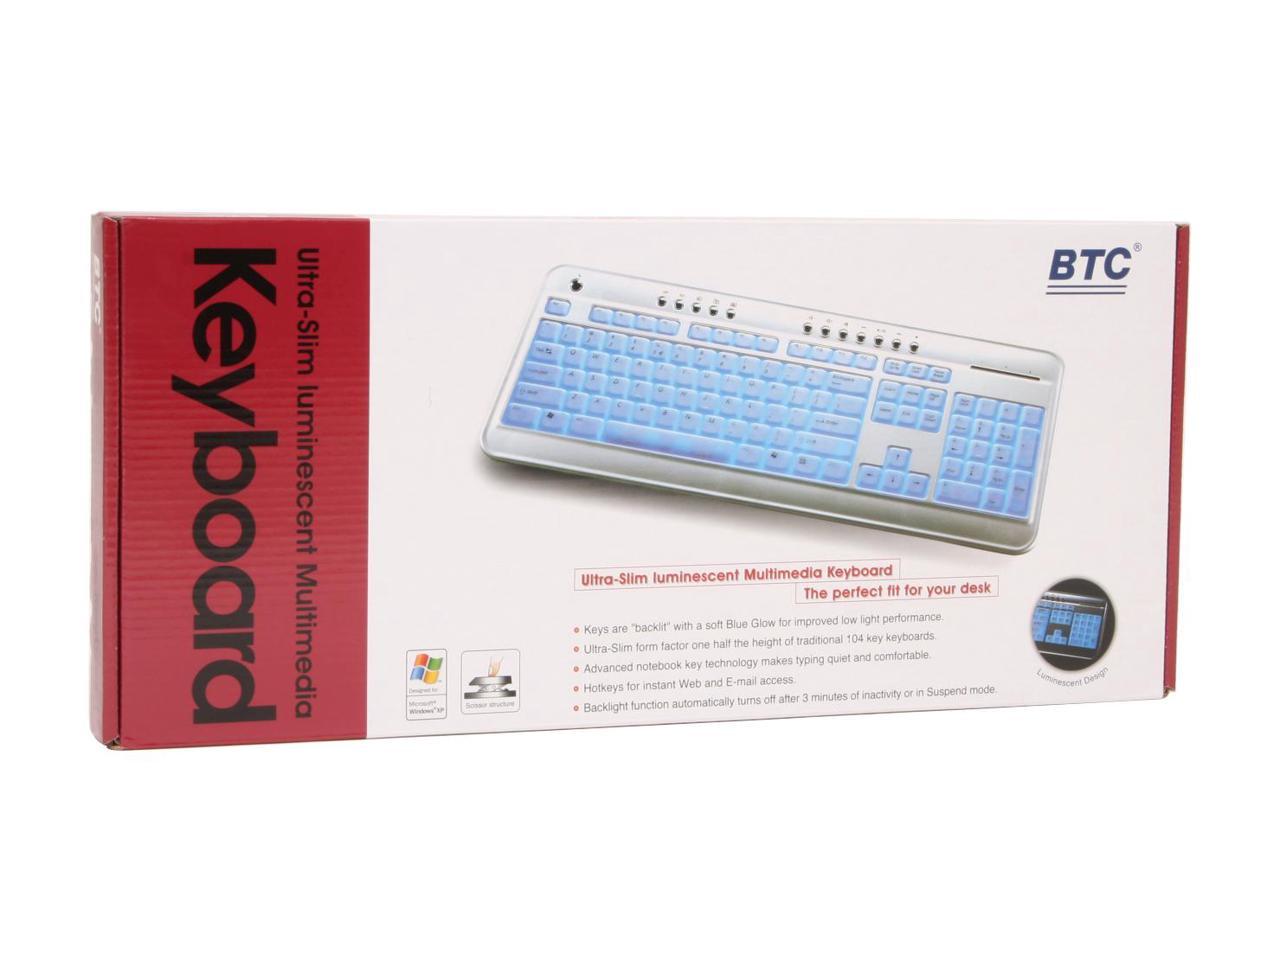 btc keyboard model 6300cl